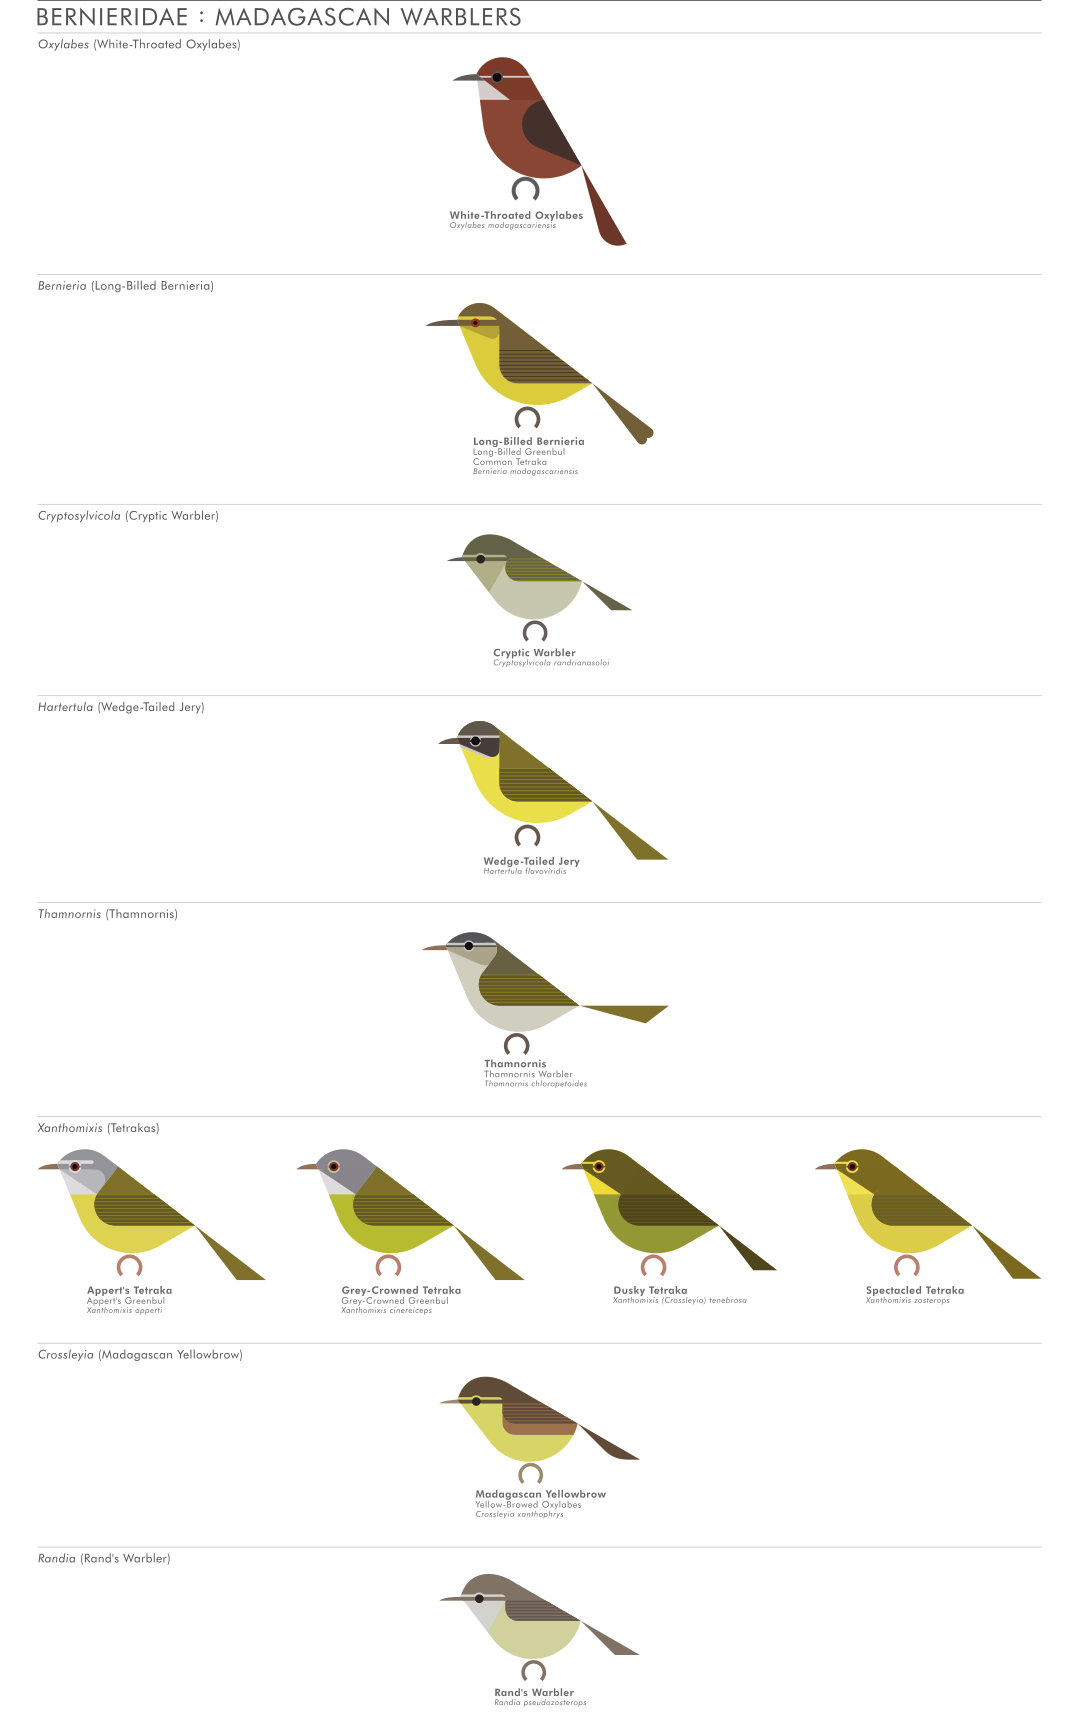 scott partridge - AVE - avian vector encyclopedia - madagascan warblers - bird vector art